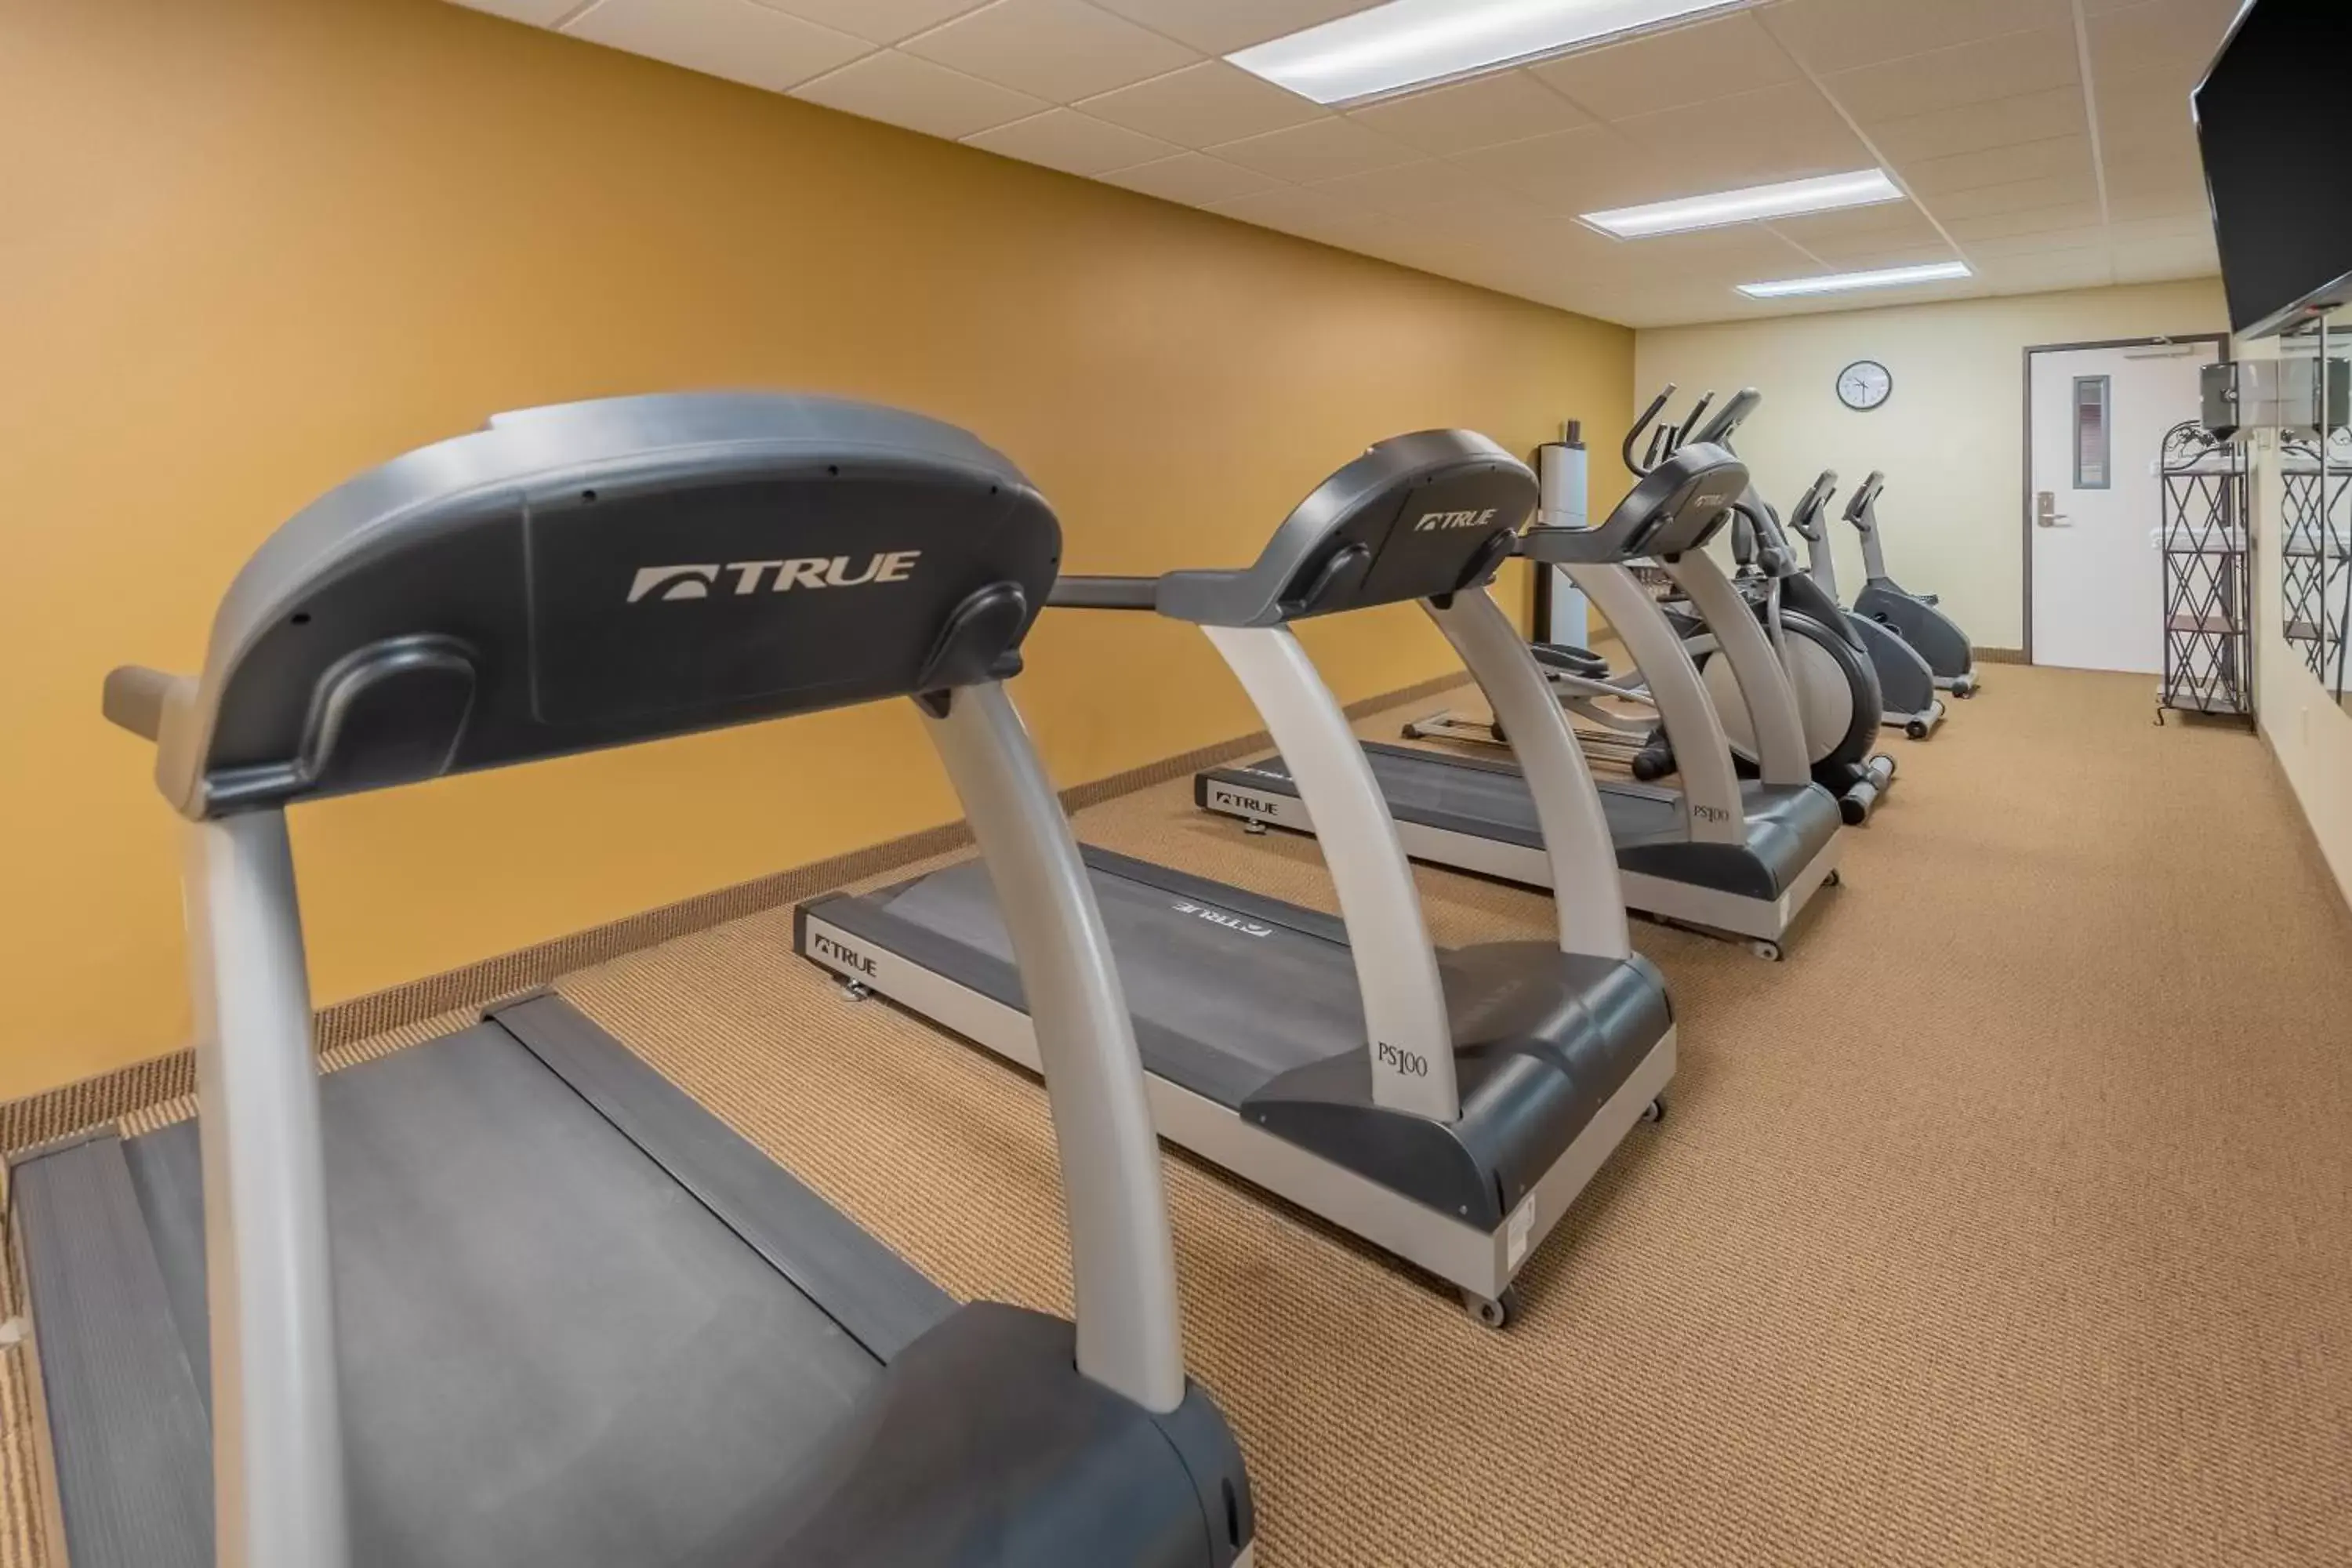 Fitness centre/facilities, Fitness Center/Facilities in Landmark Suites - Williston